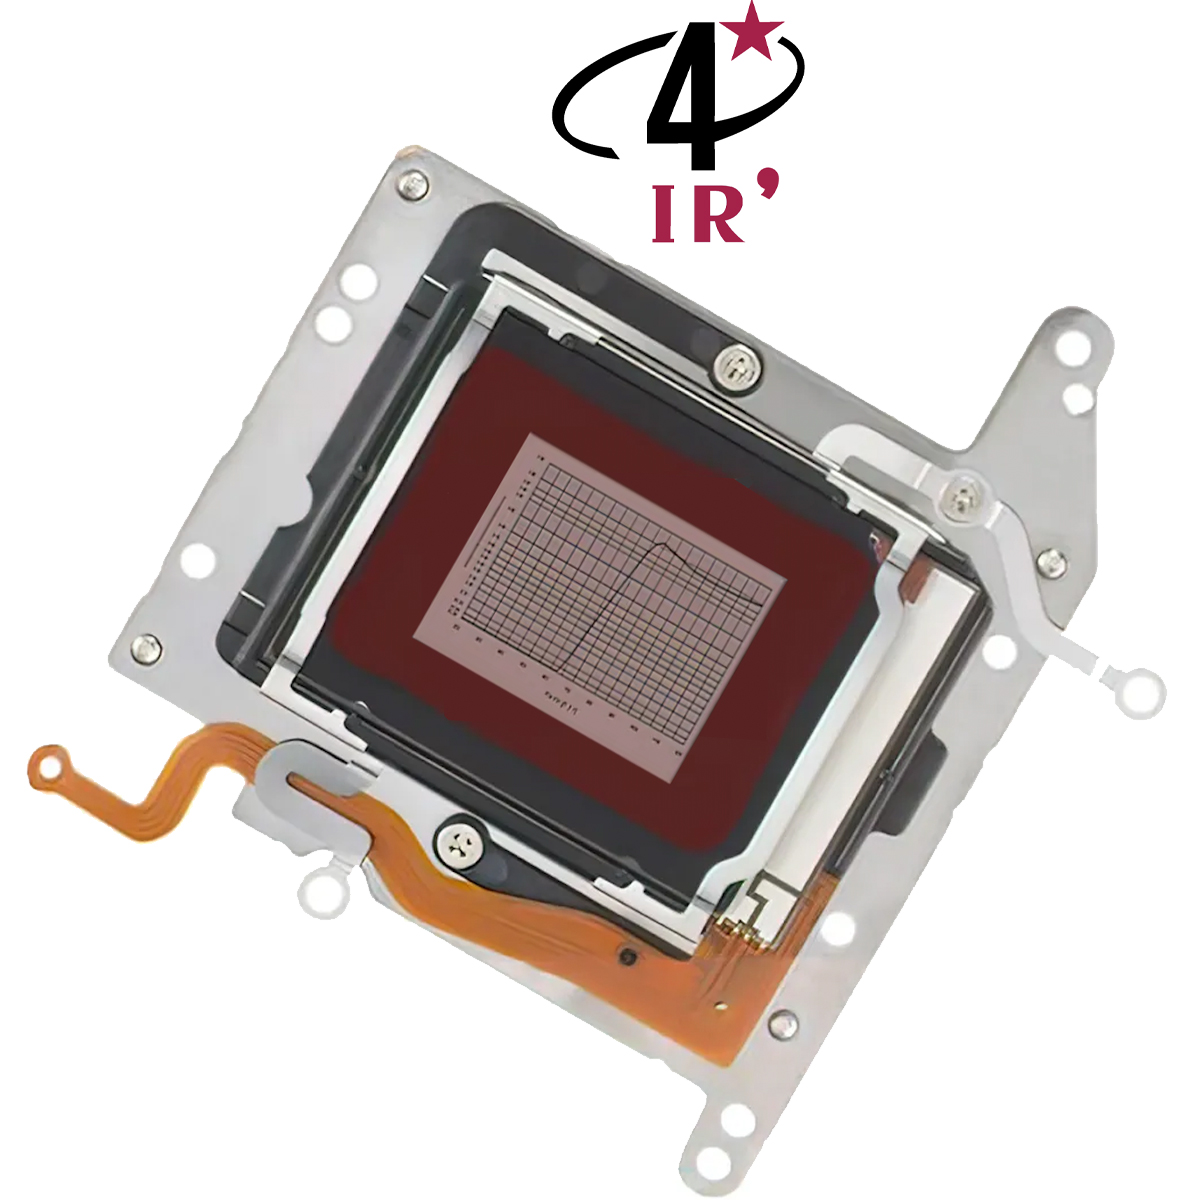 Digital camera conversion with an IR RG715 or RG830 Schott infrared filter